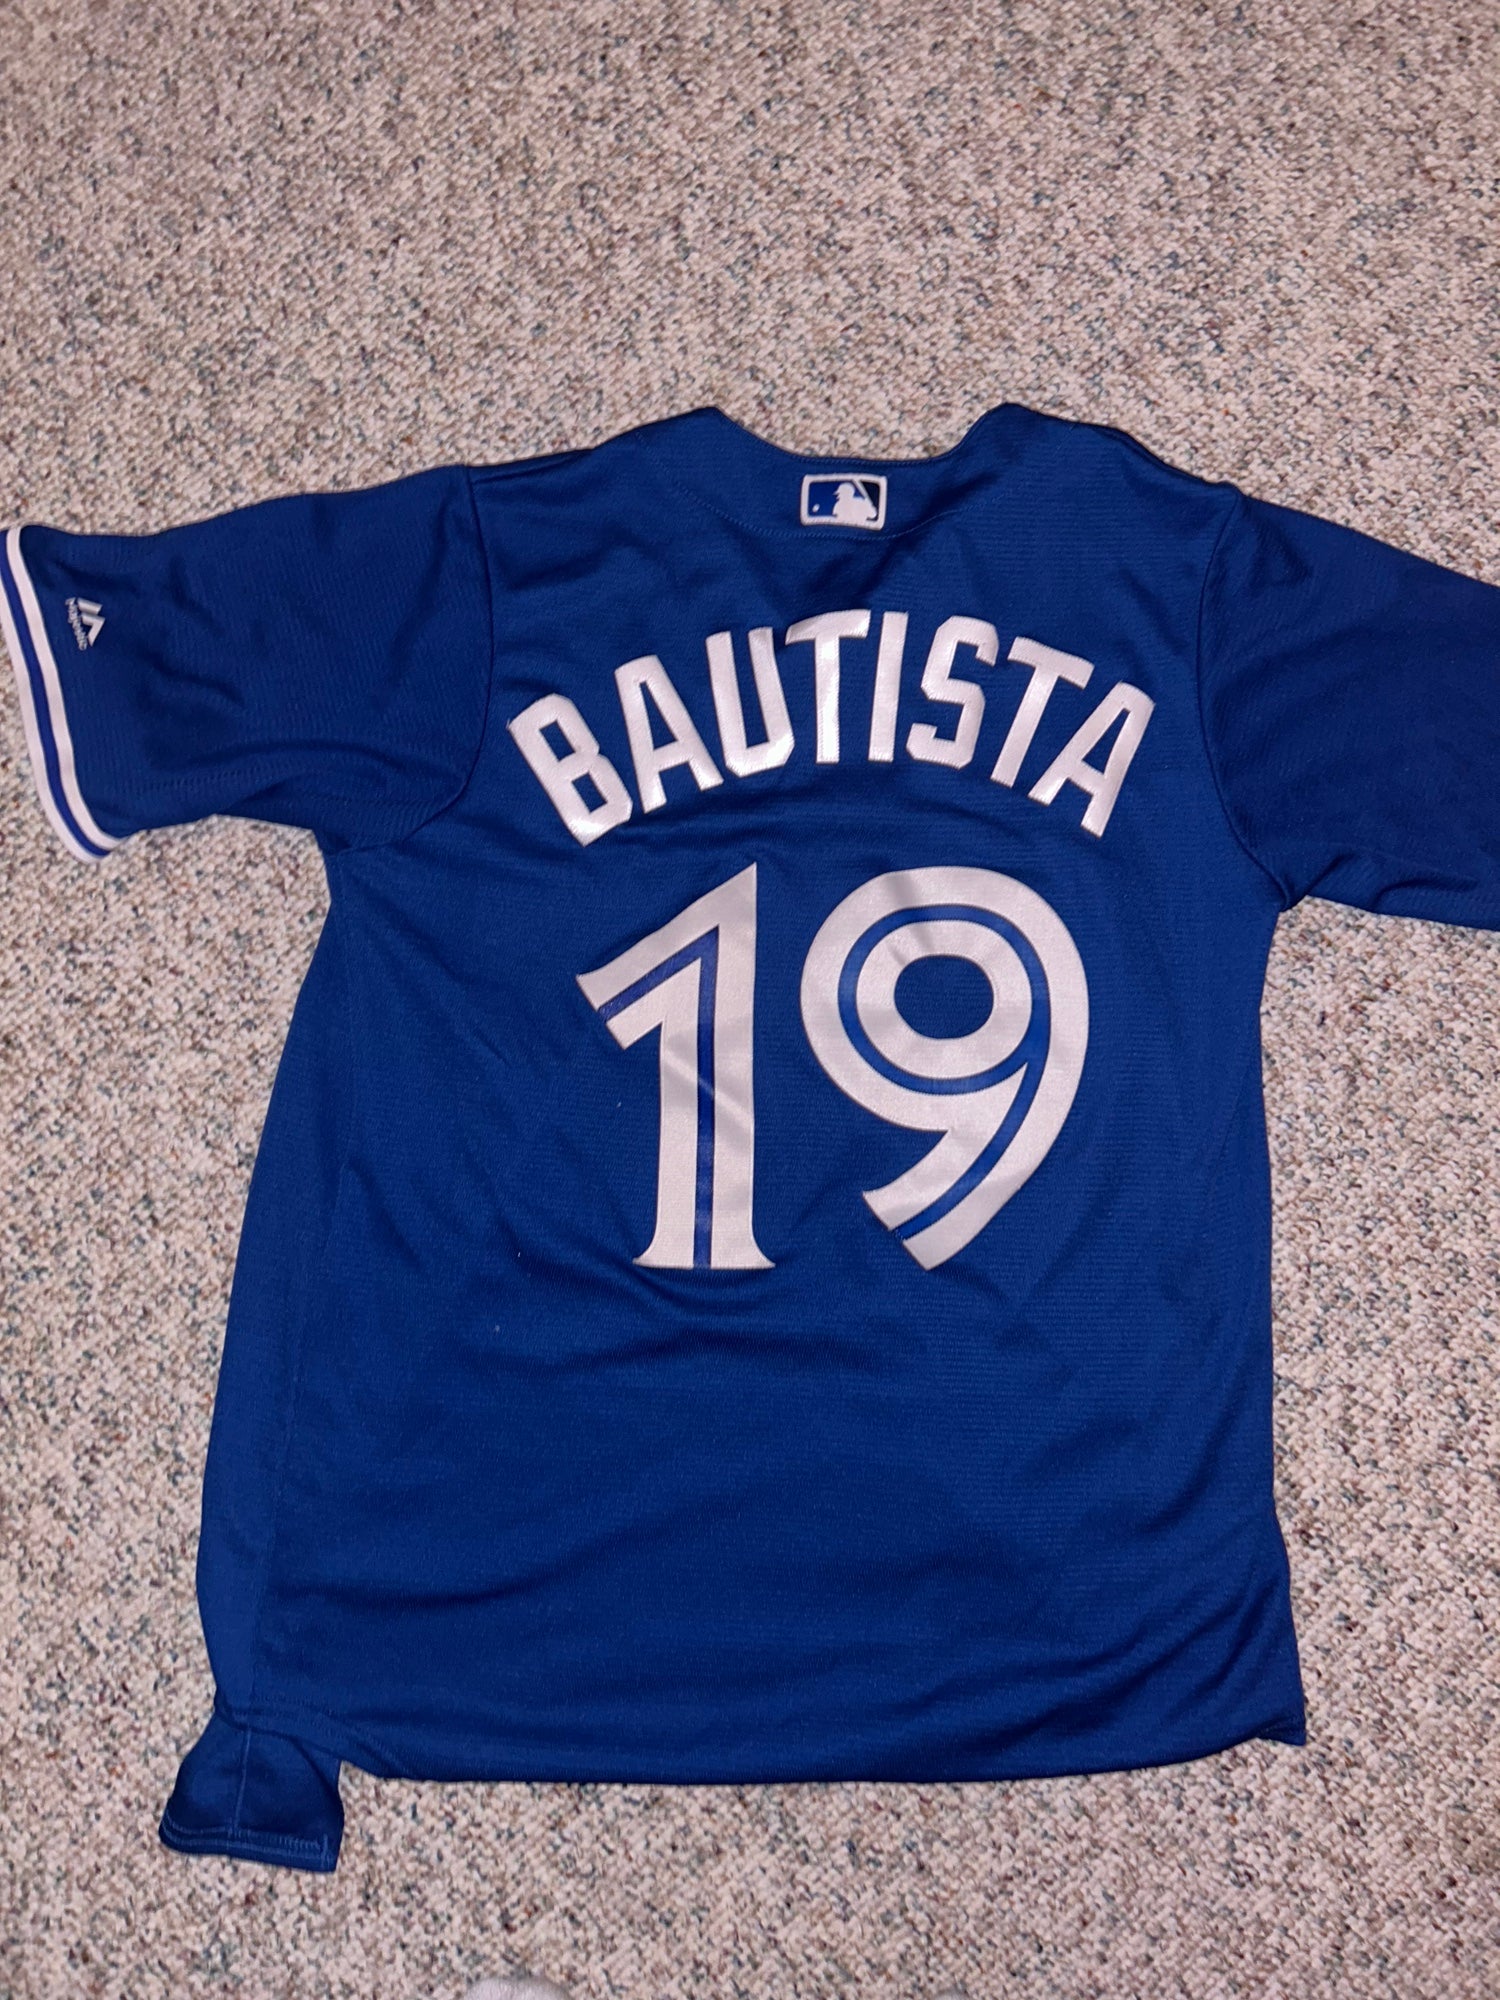 Toronto Blue Jays Jose Bautista Jersey